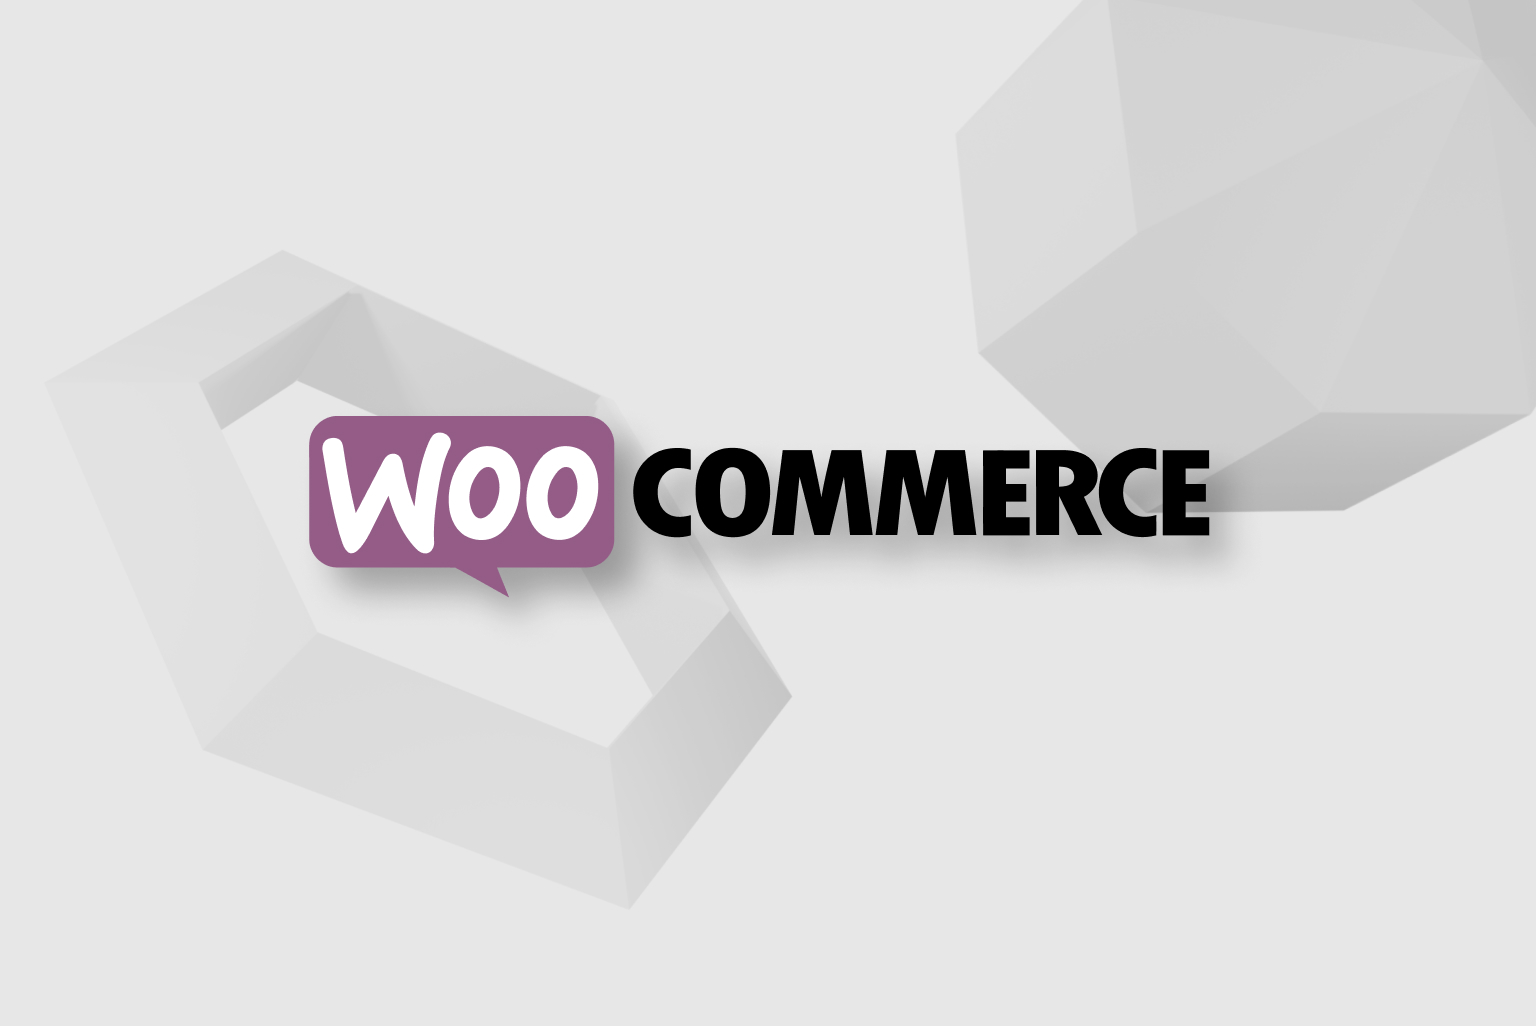 WooCommerce multi vendor marketplace platform